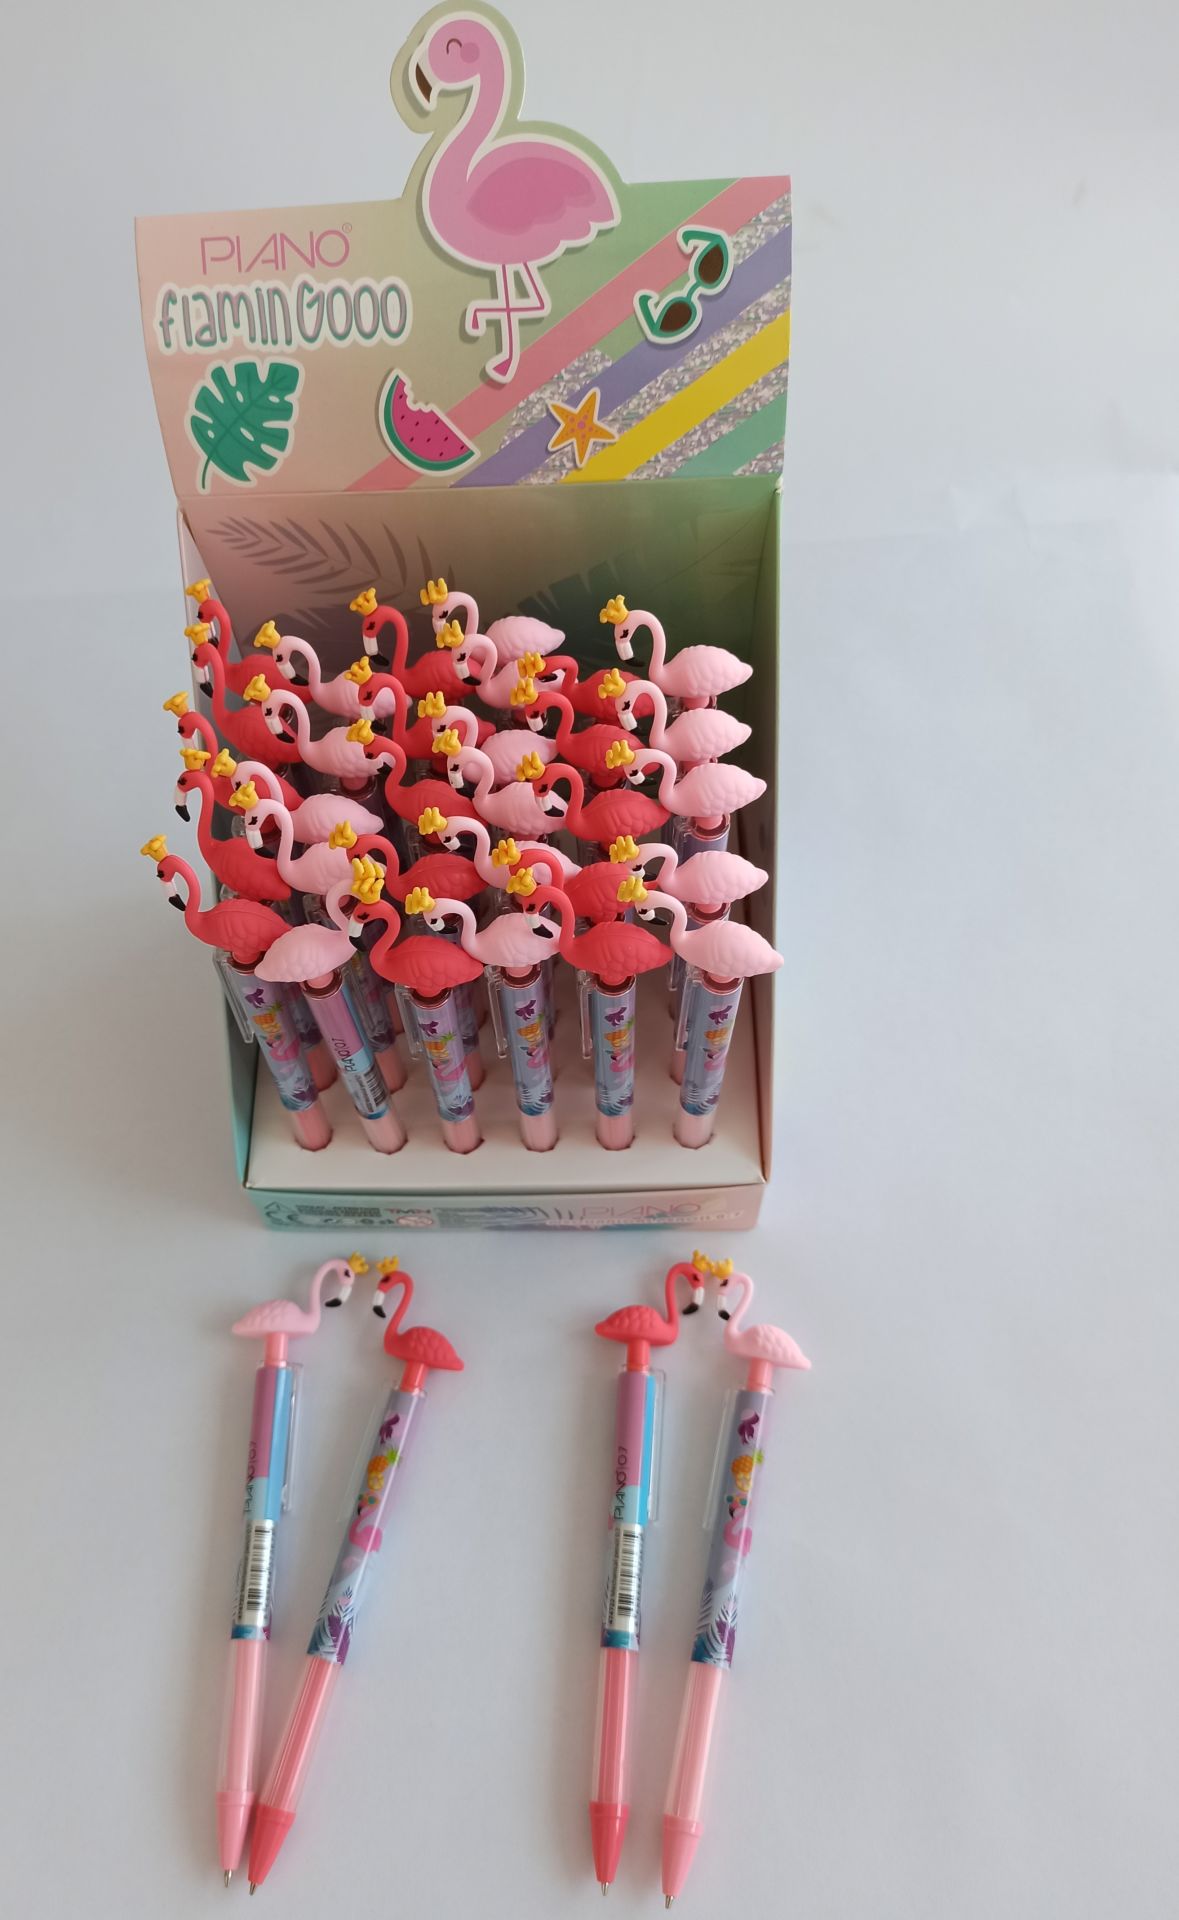 Piano Flamingo Uçlu Kalem 0.7 Uç